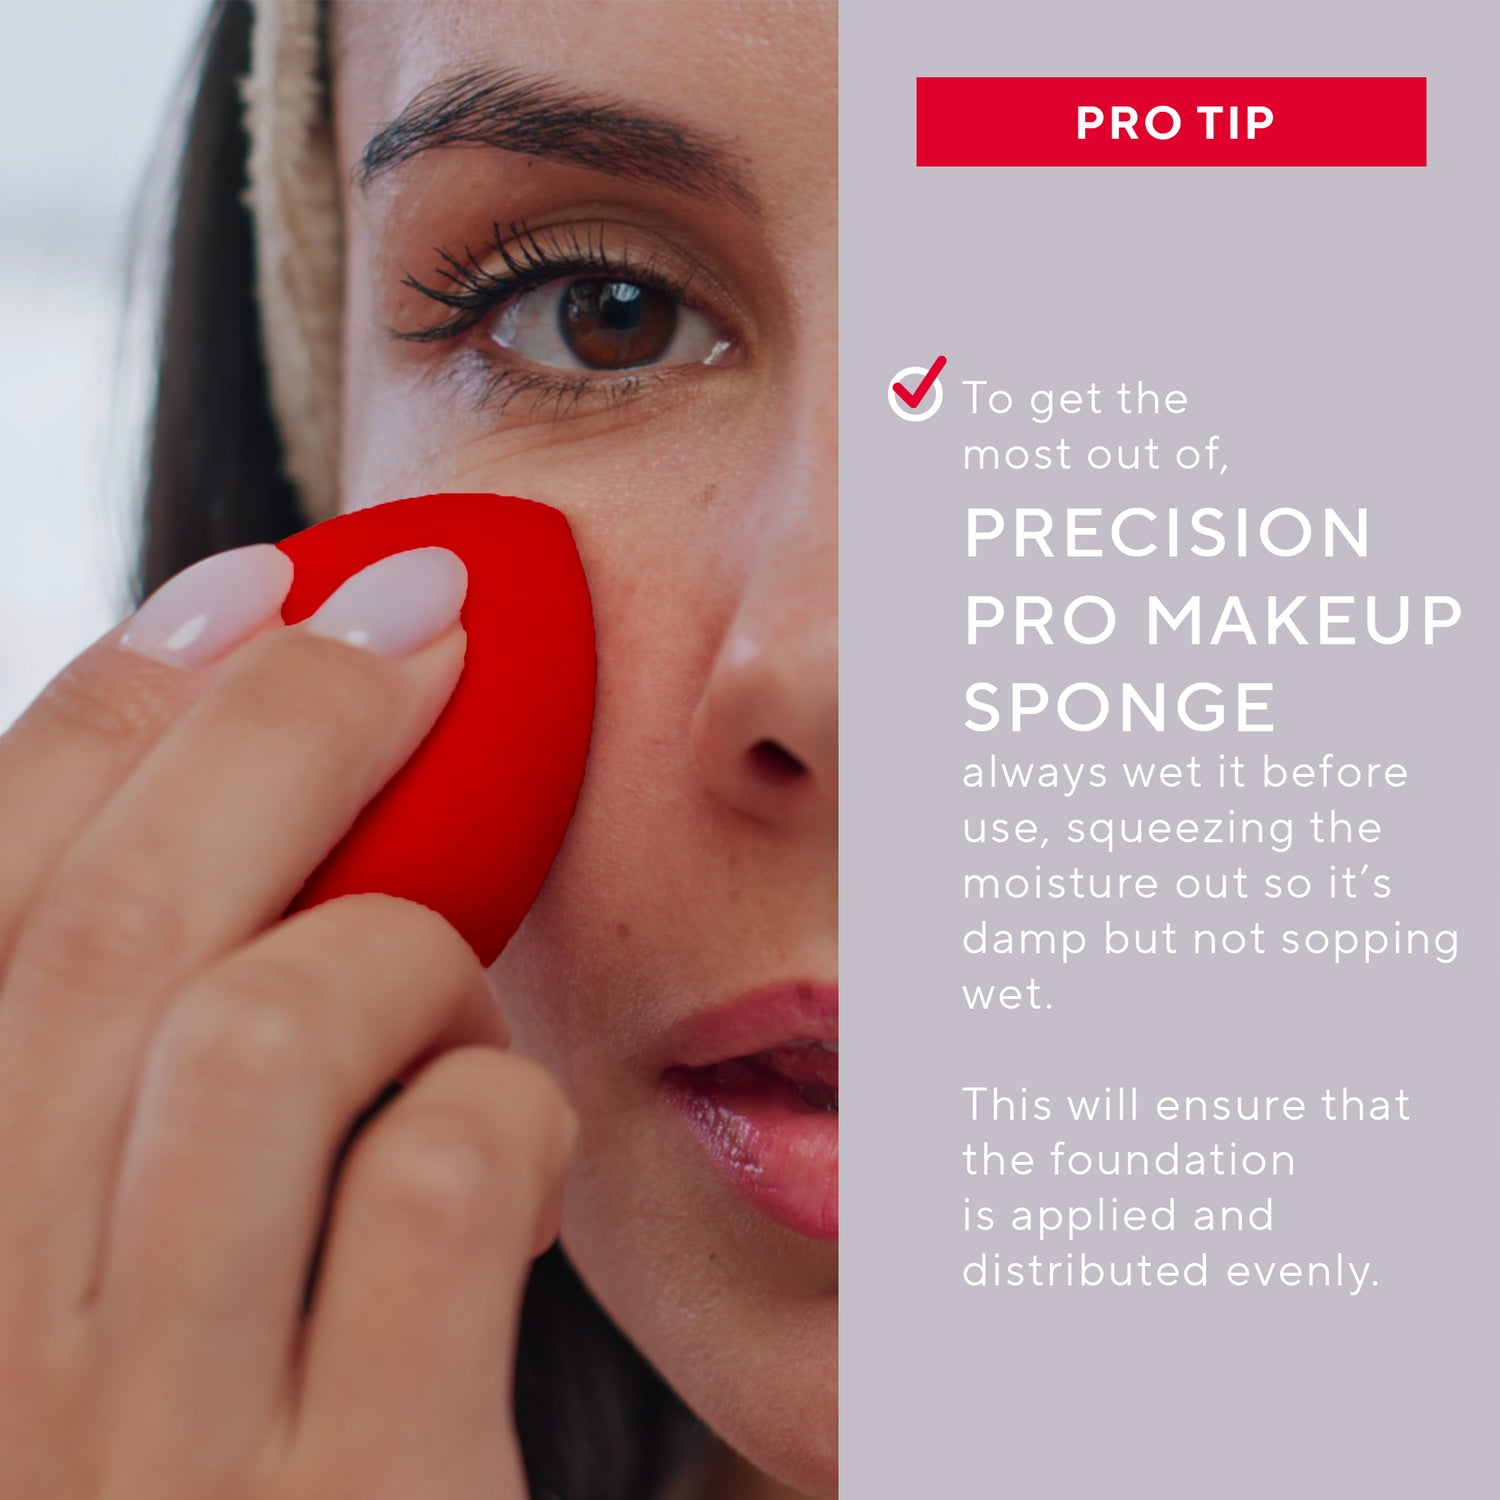 Mirabella Beauty Precision Pro Makeup Sponge - beauty blender makeup sponge Pro Tip